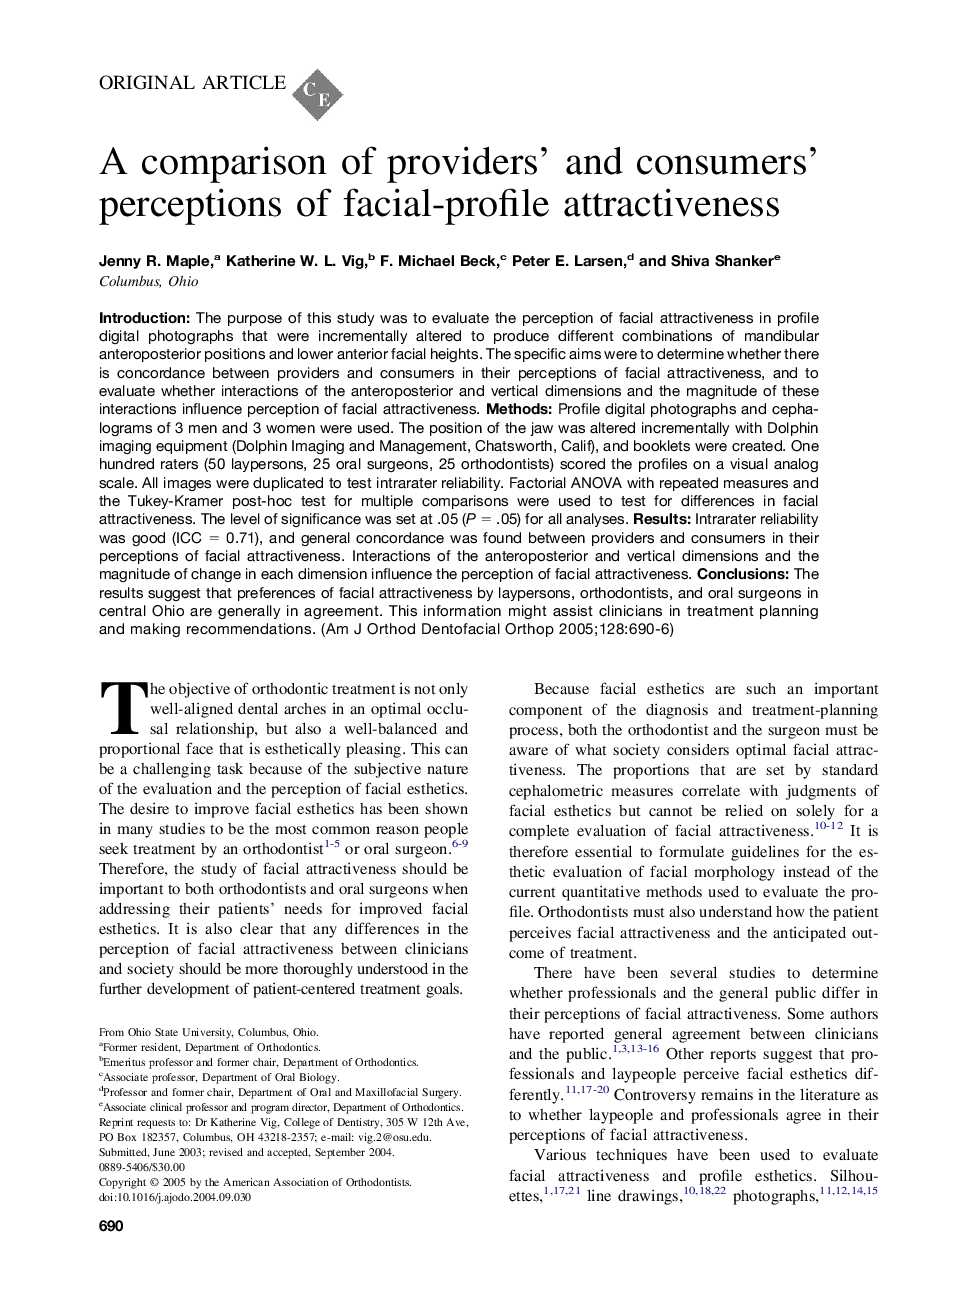 A comparison of providers' and consumers' perceptions of facial-profile attractiveness